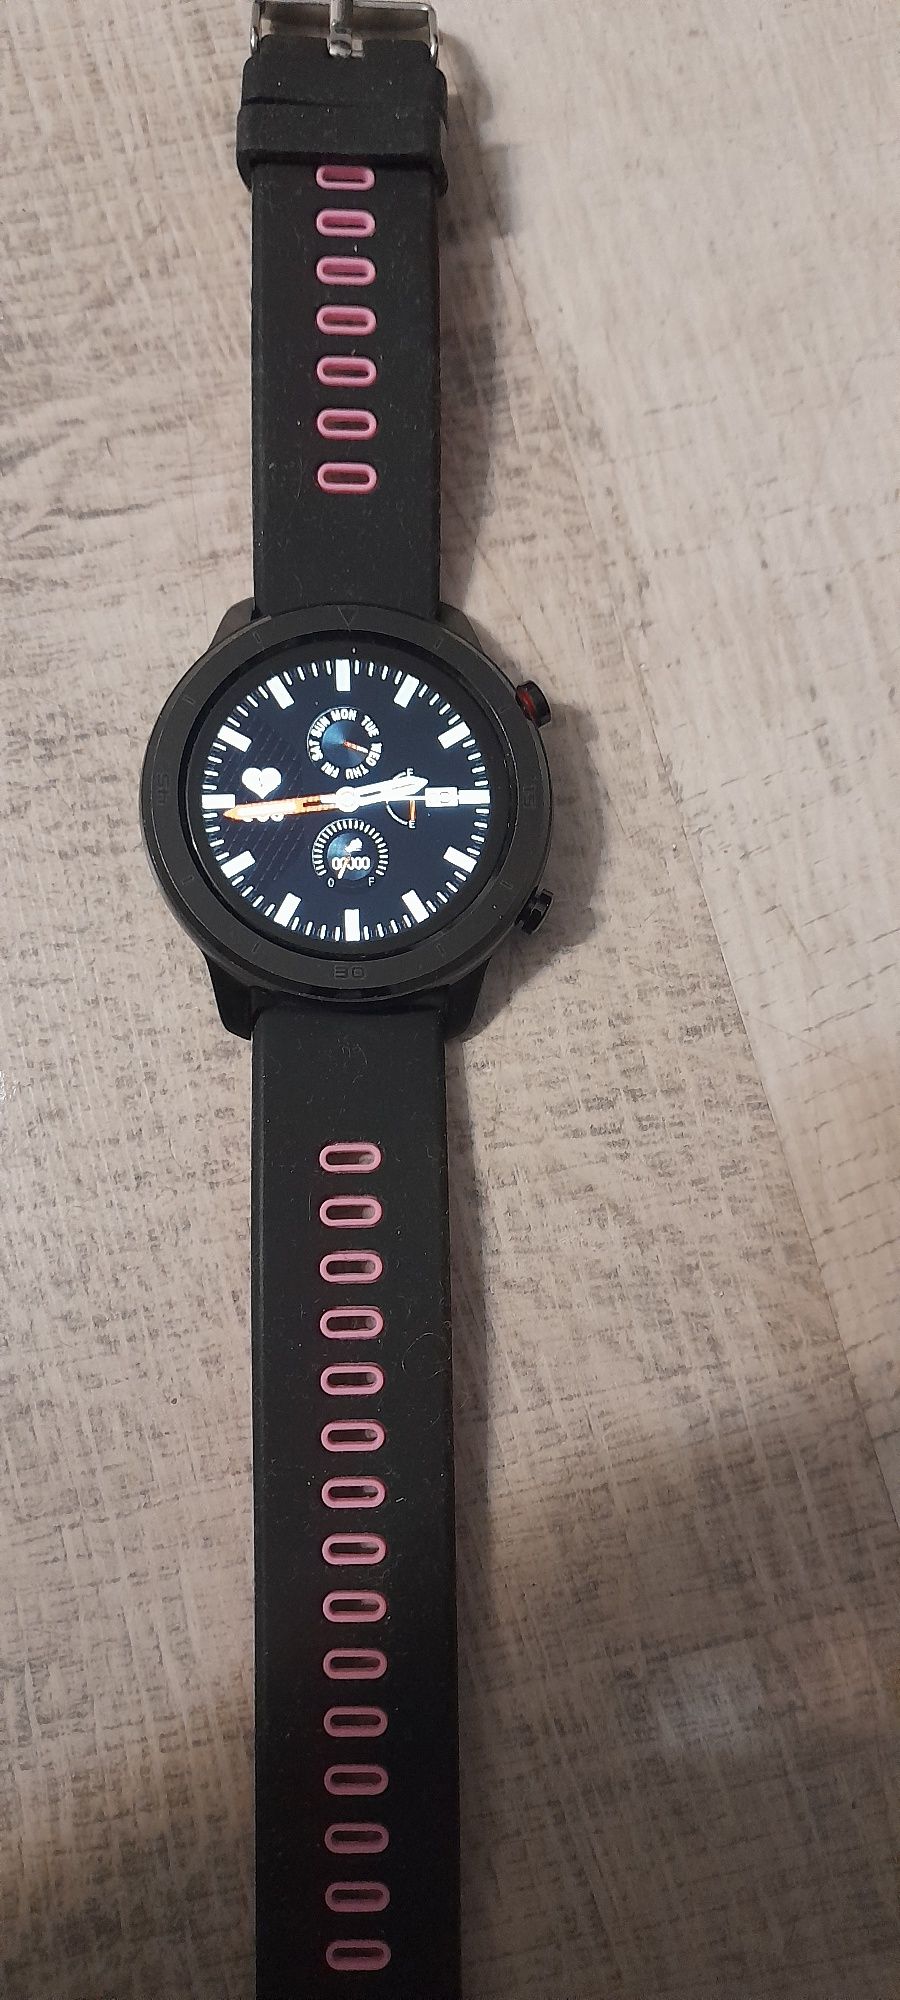 Smartwatch garett 5s